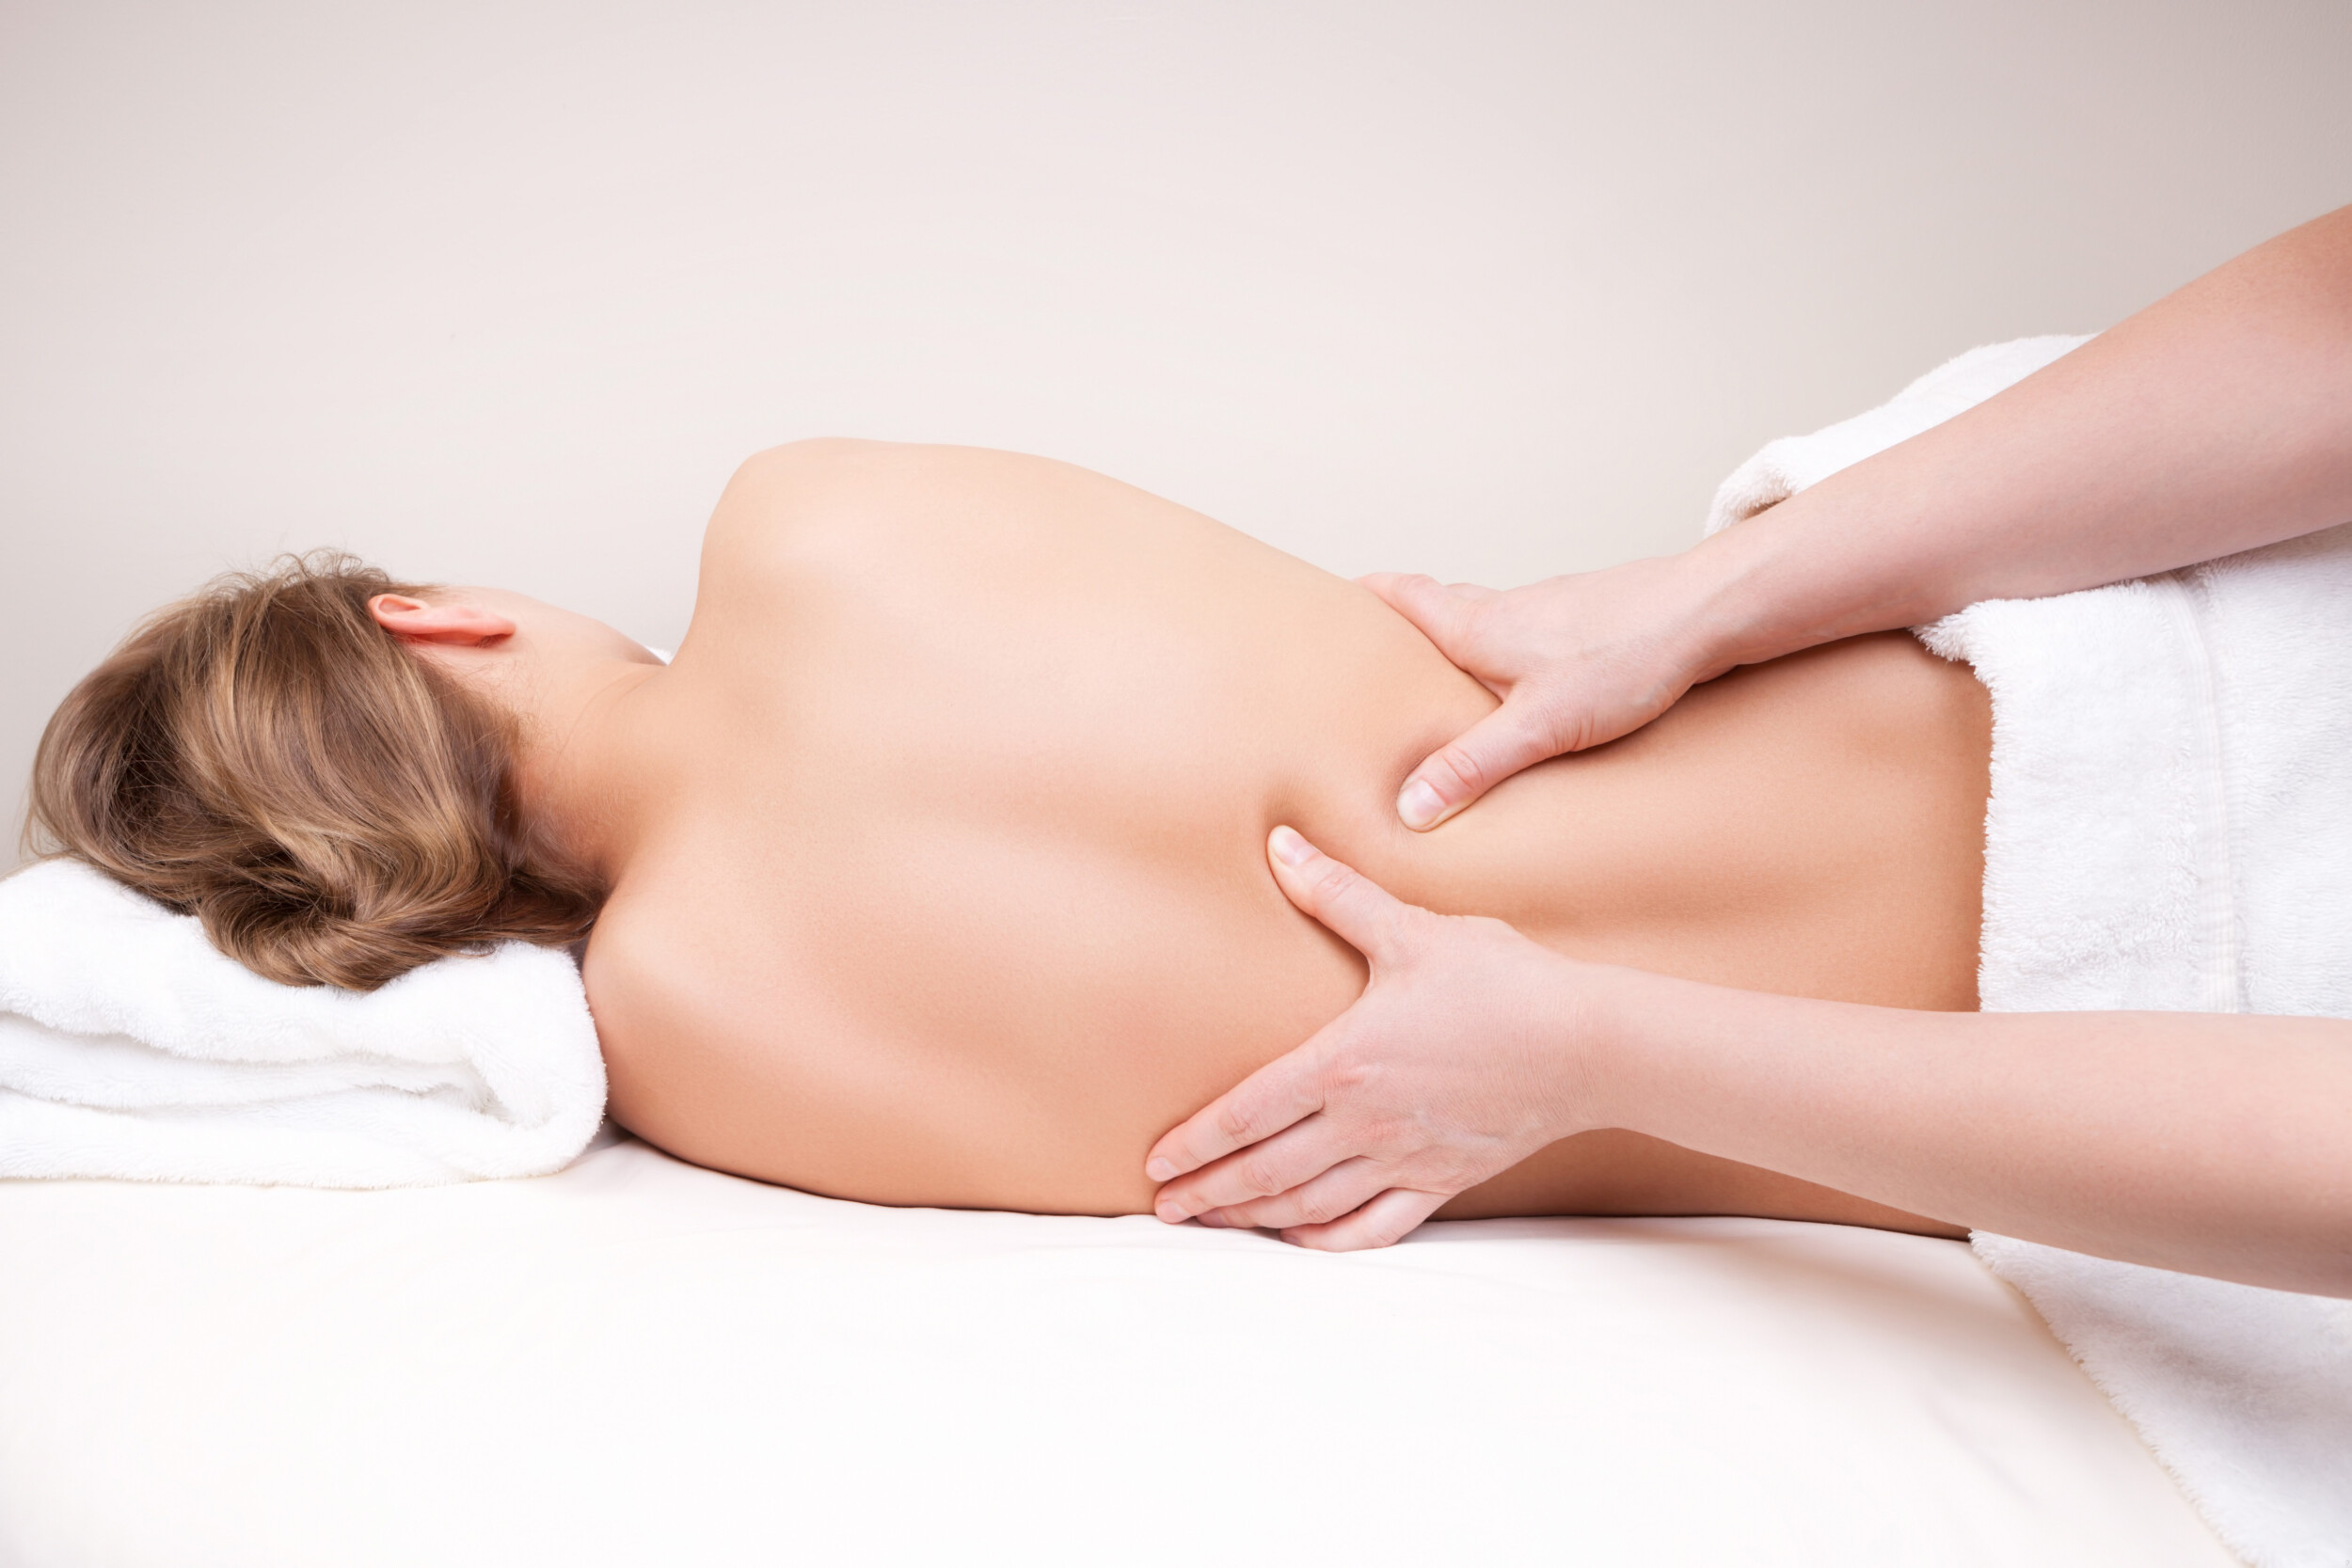 Massage 7. Массаж спины. Пояс для массажа. Массаж поясницы. Массаж спины и поясницы.